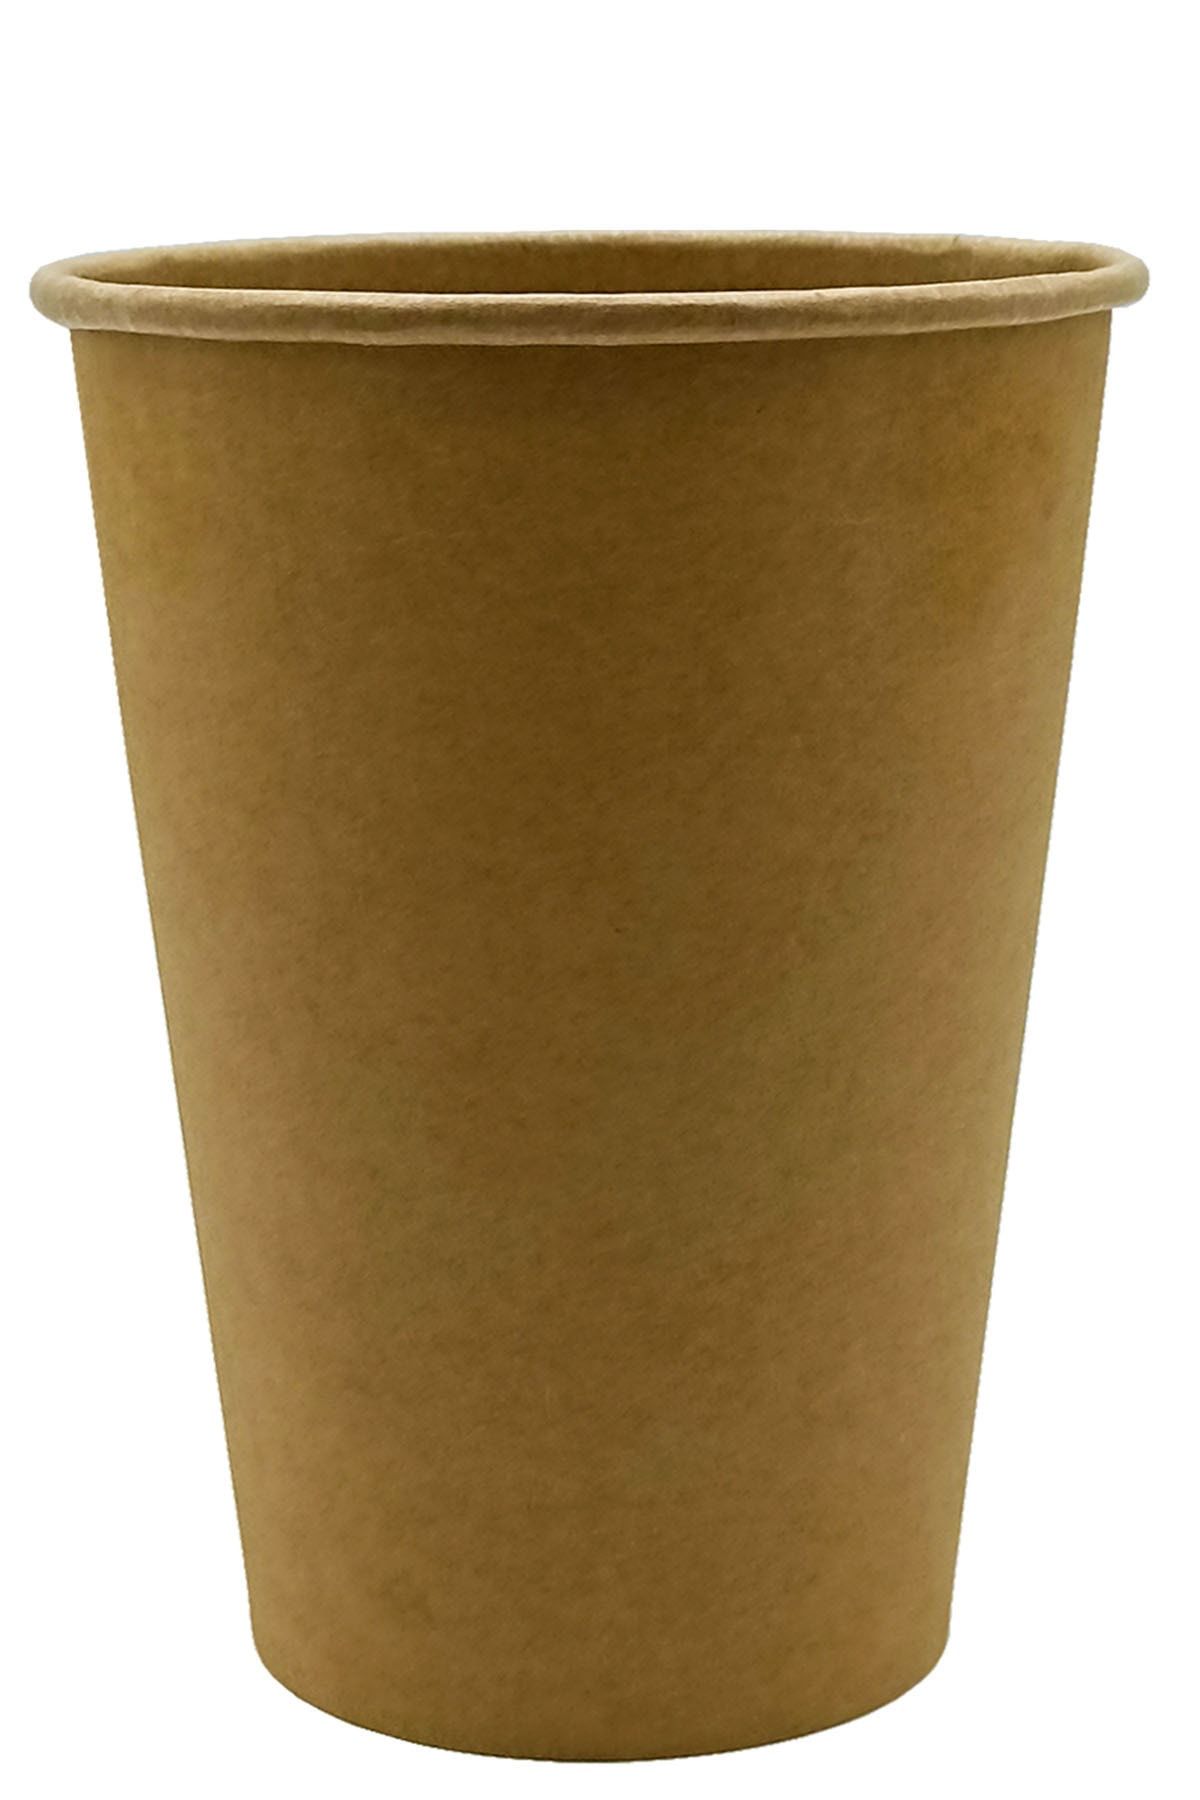 Afra Tedarik 14 Oz Karton Bardak Latte Cappuccino Kraft Kağıt Bardak 380 ml - 50'li